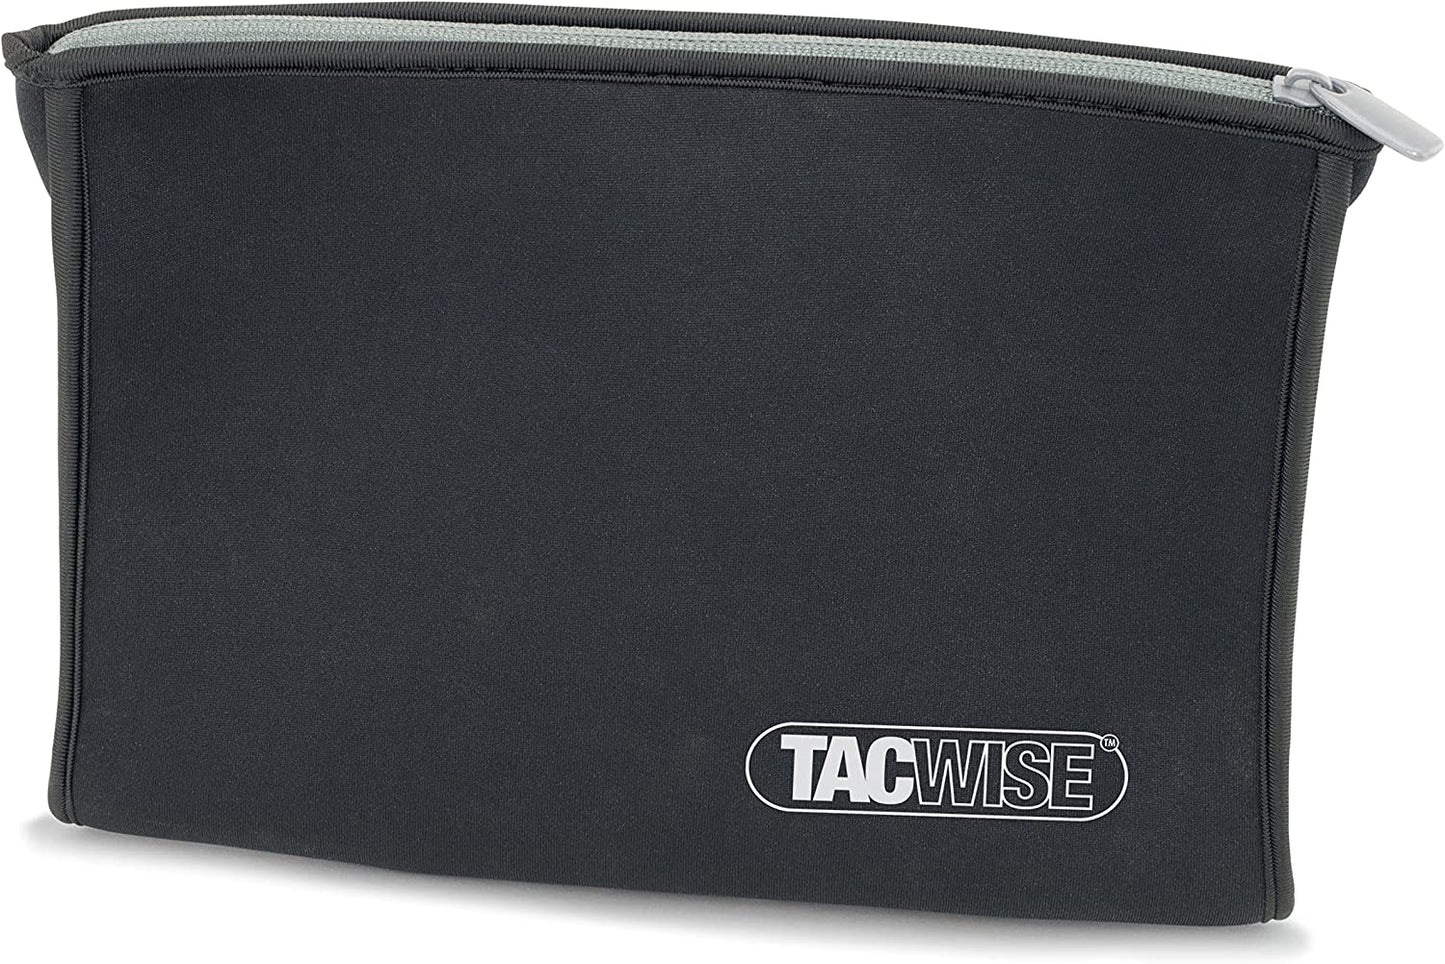 Tacwise 1565 53-13EL Cordless 12V Staple/Nail Gun With 400 Staples & storage bag